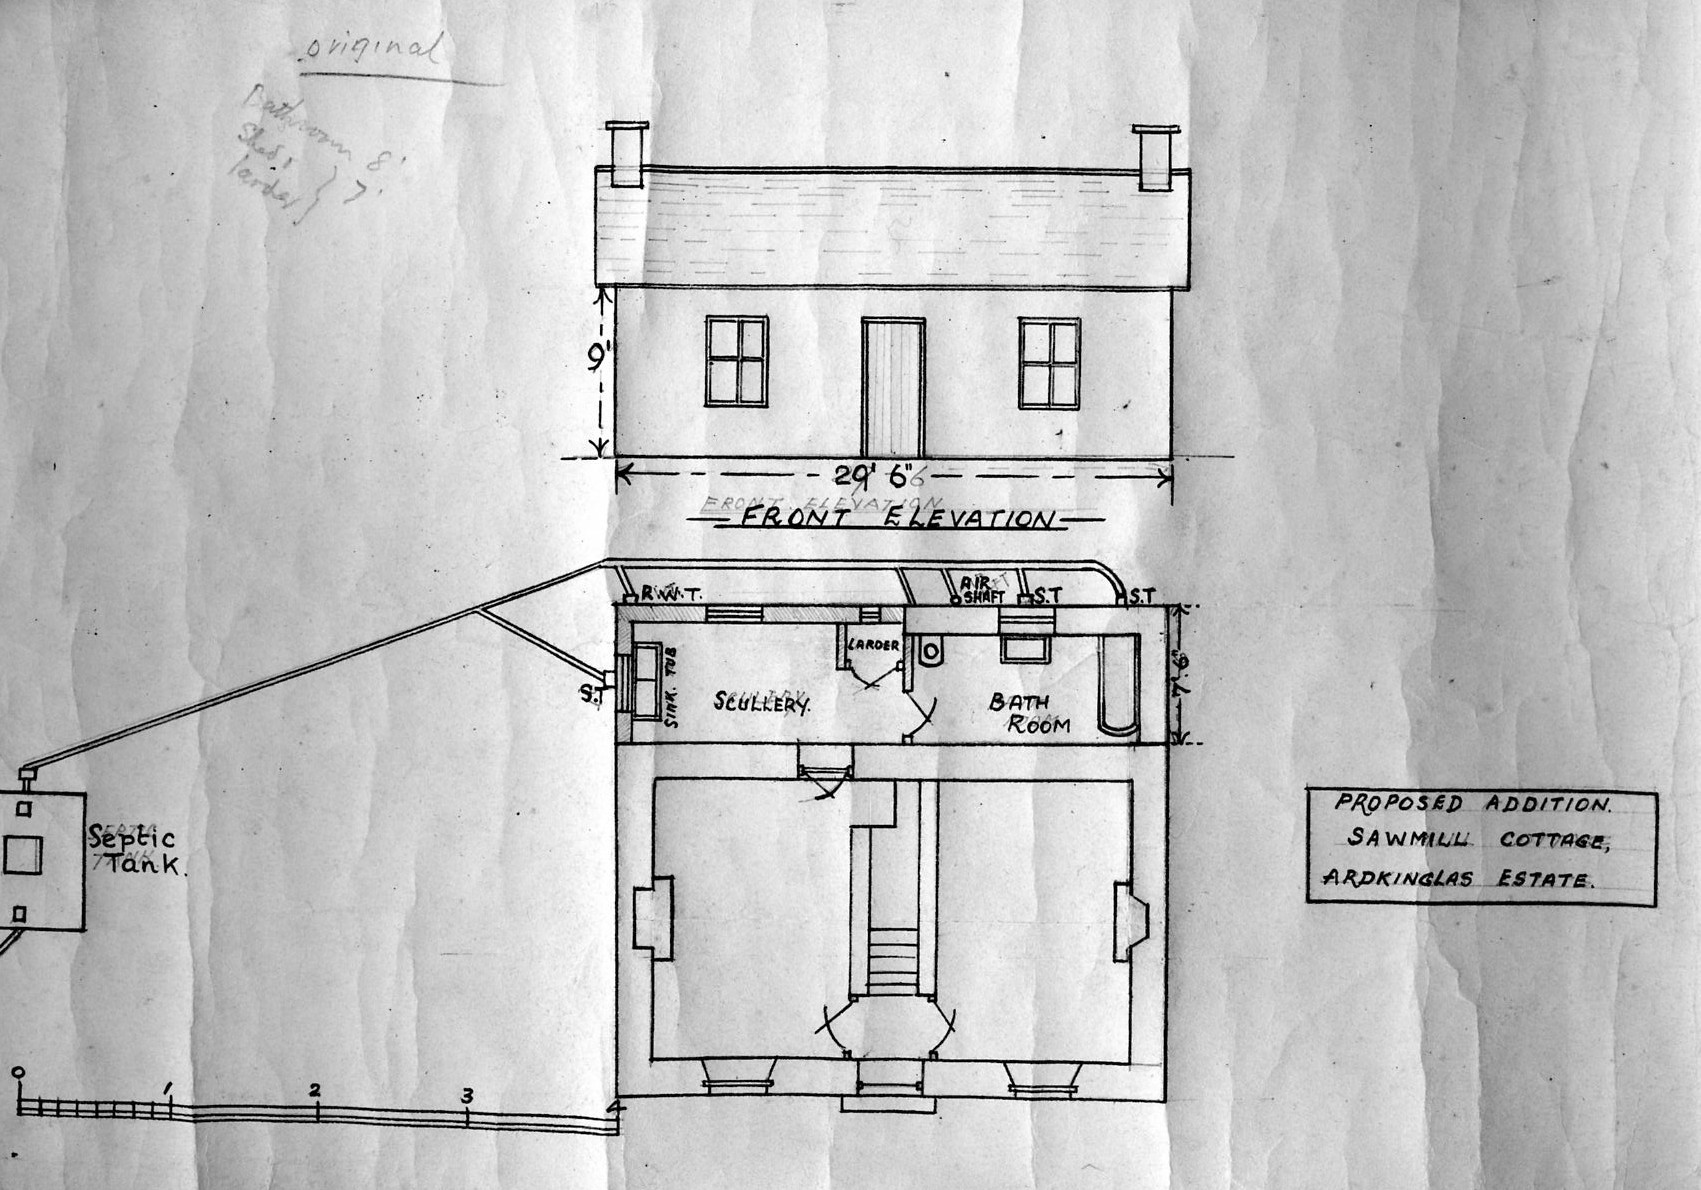 Sawmill Cottage, Plans